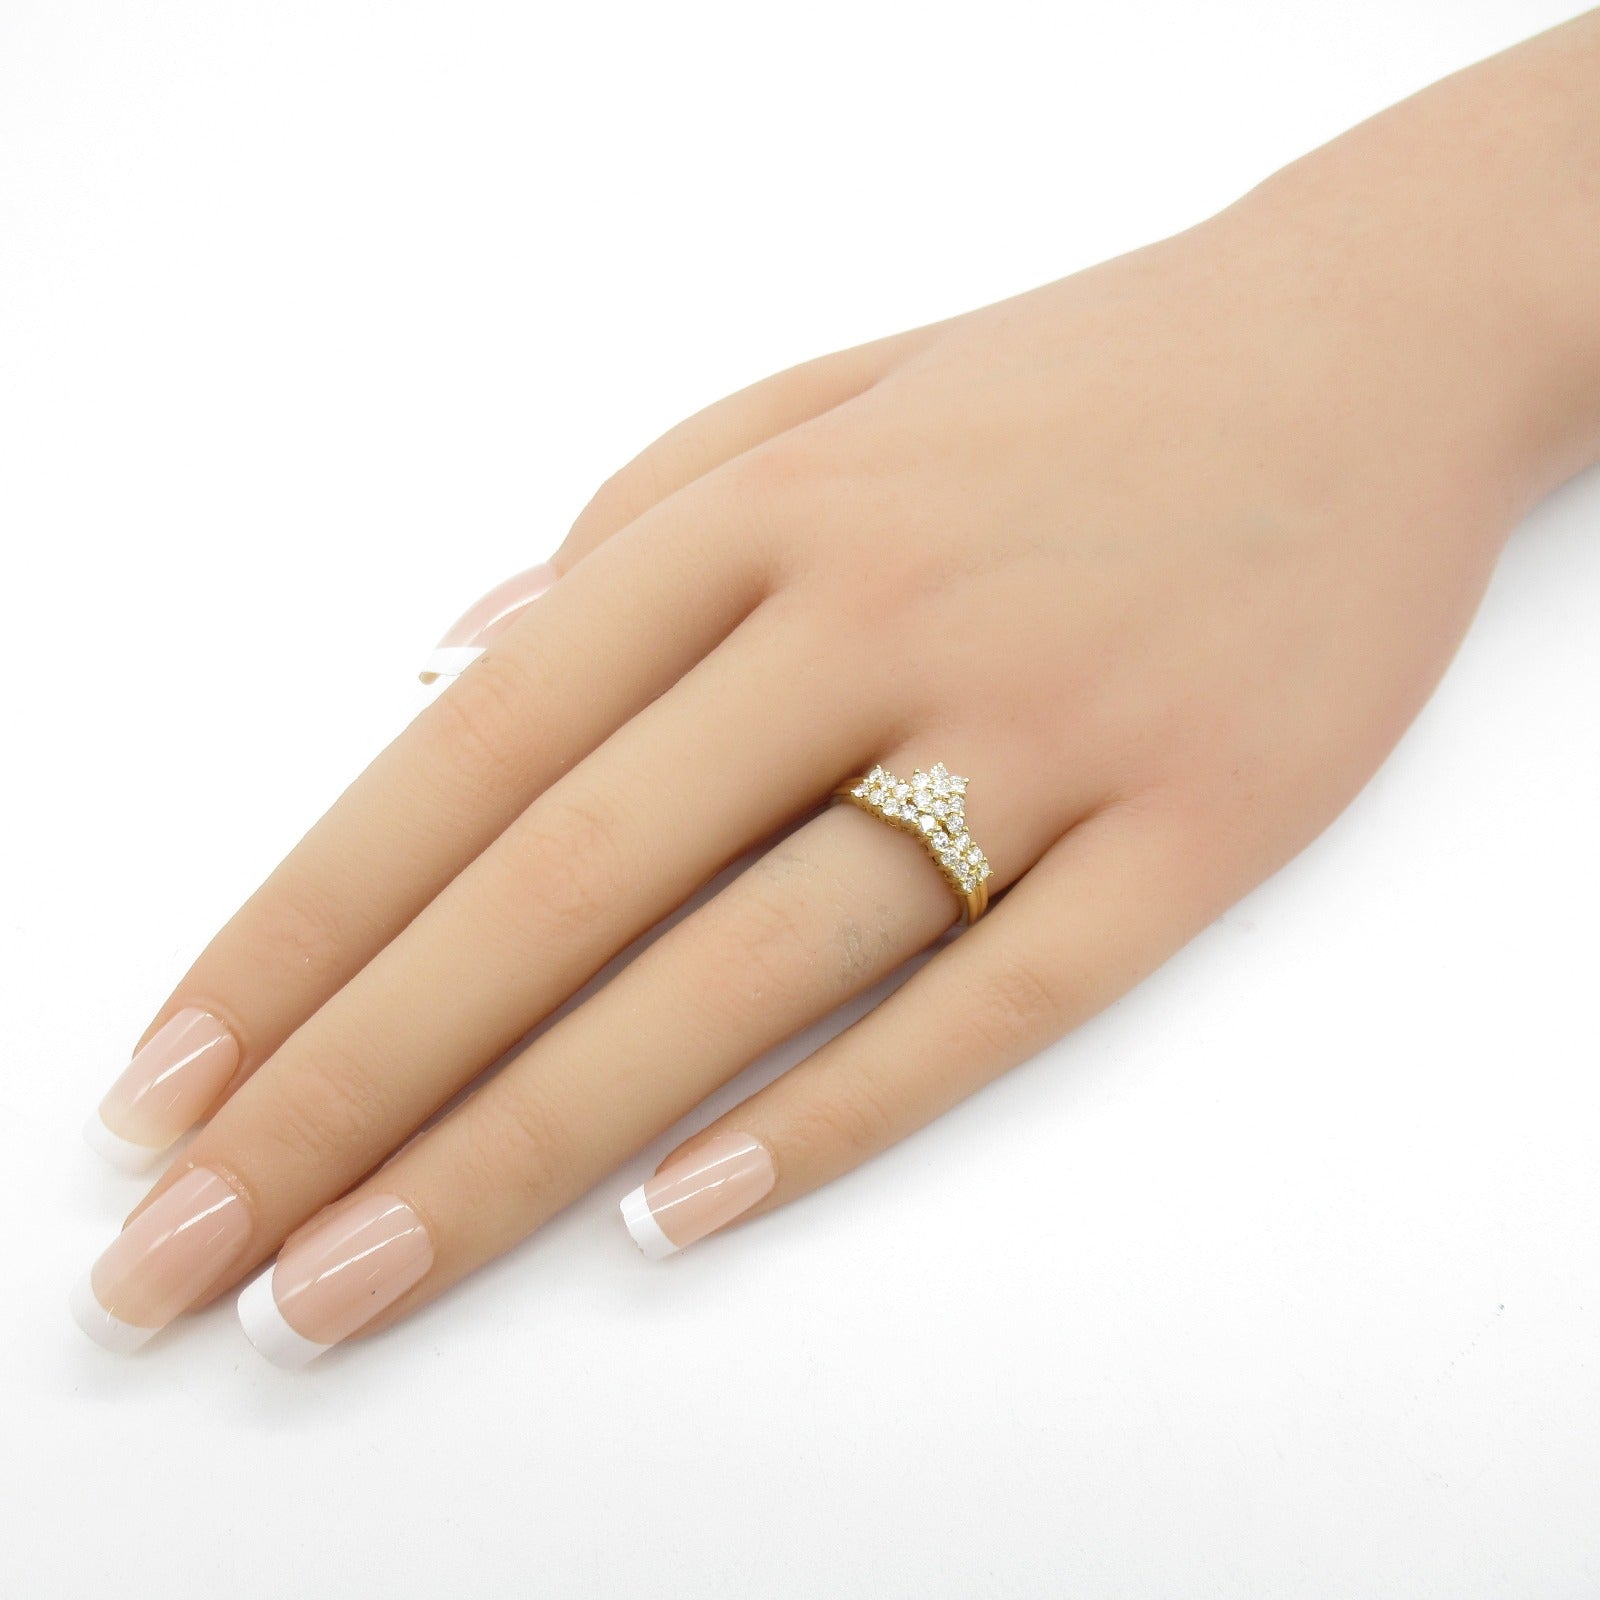 Jewelry Jewelry Diamond Ring Ring Ring Jewelry K18 (yellow g) Diamond  Clear Diamond 4.0g